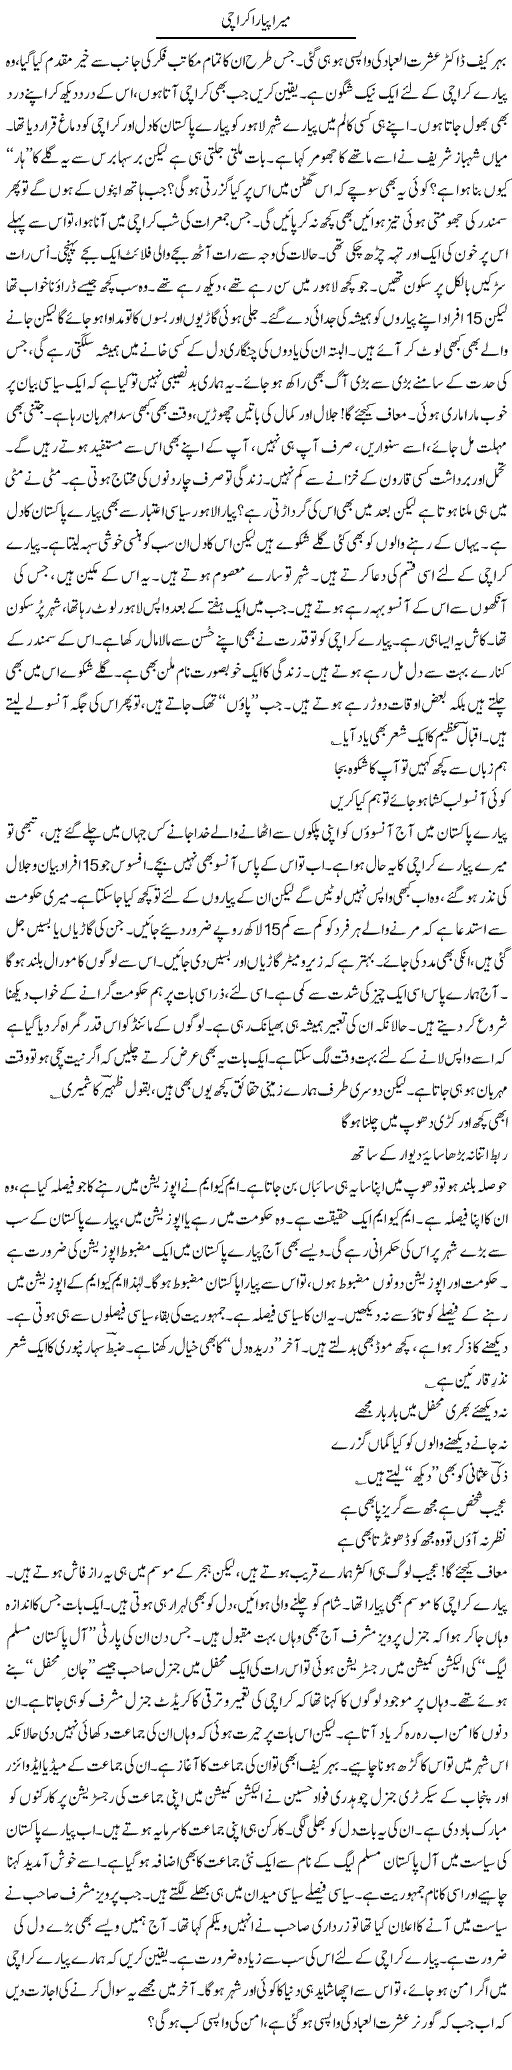 My Karachi Express Column Ijaz Abdul Hafeez 24 July 2011